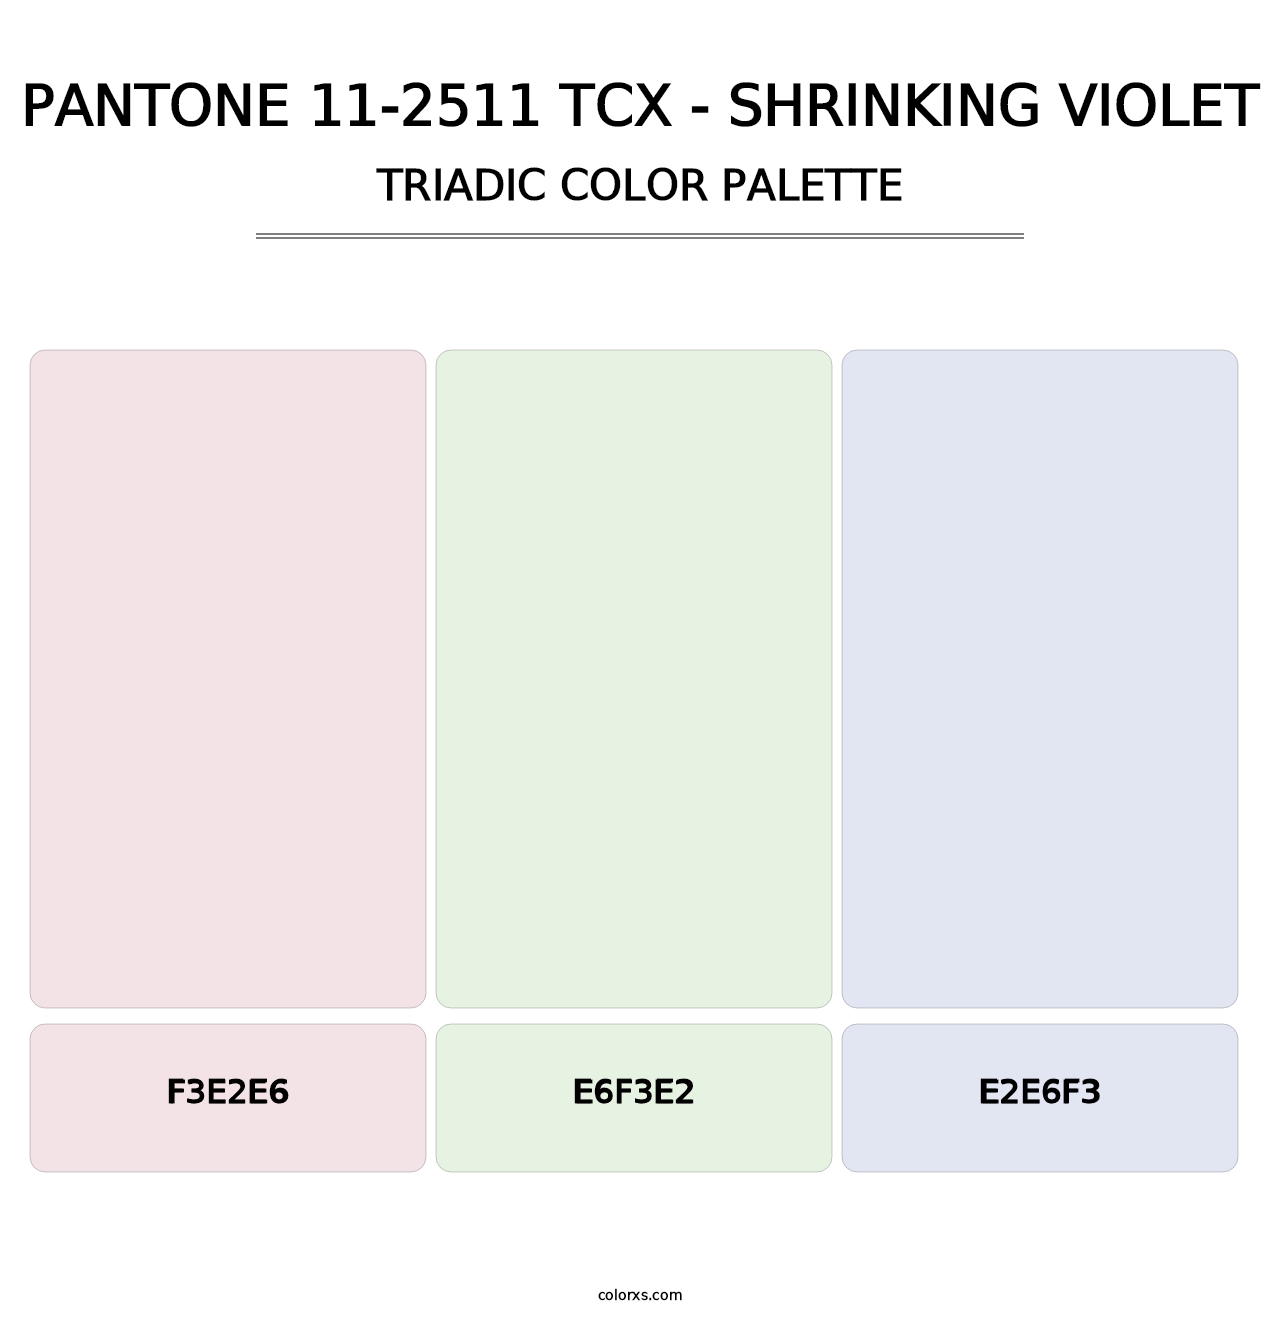 PANTONE 11-2511 TCX - Shrinking Violet - Triadic Color Palette